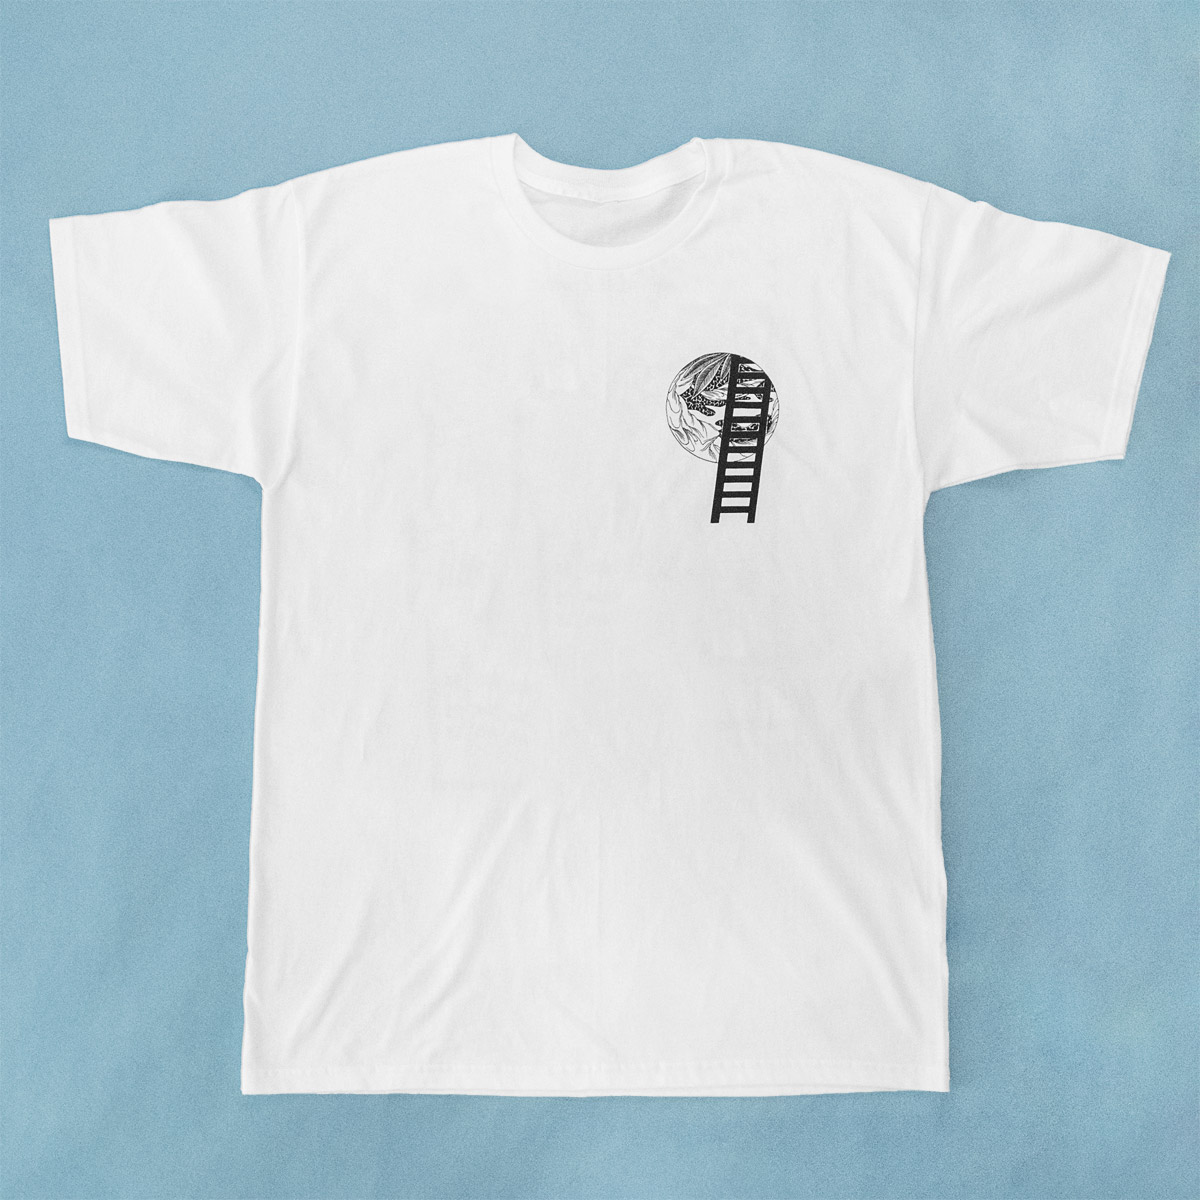 Patrick Kyle T-Shirt